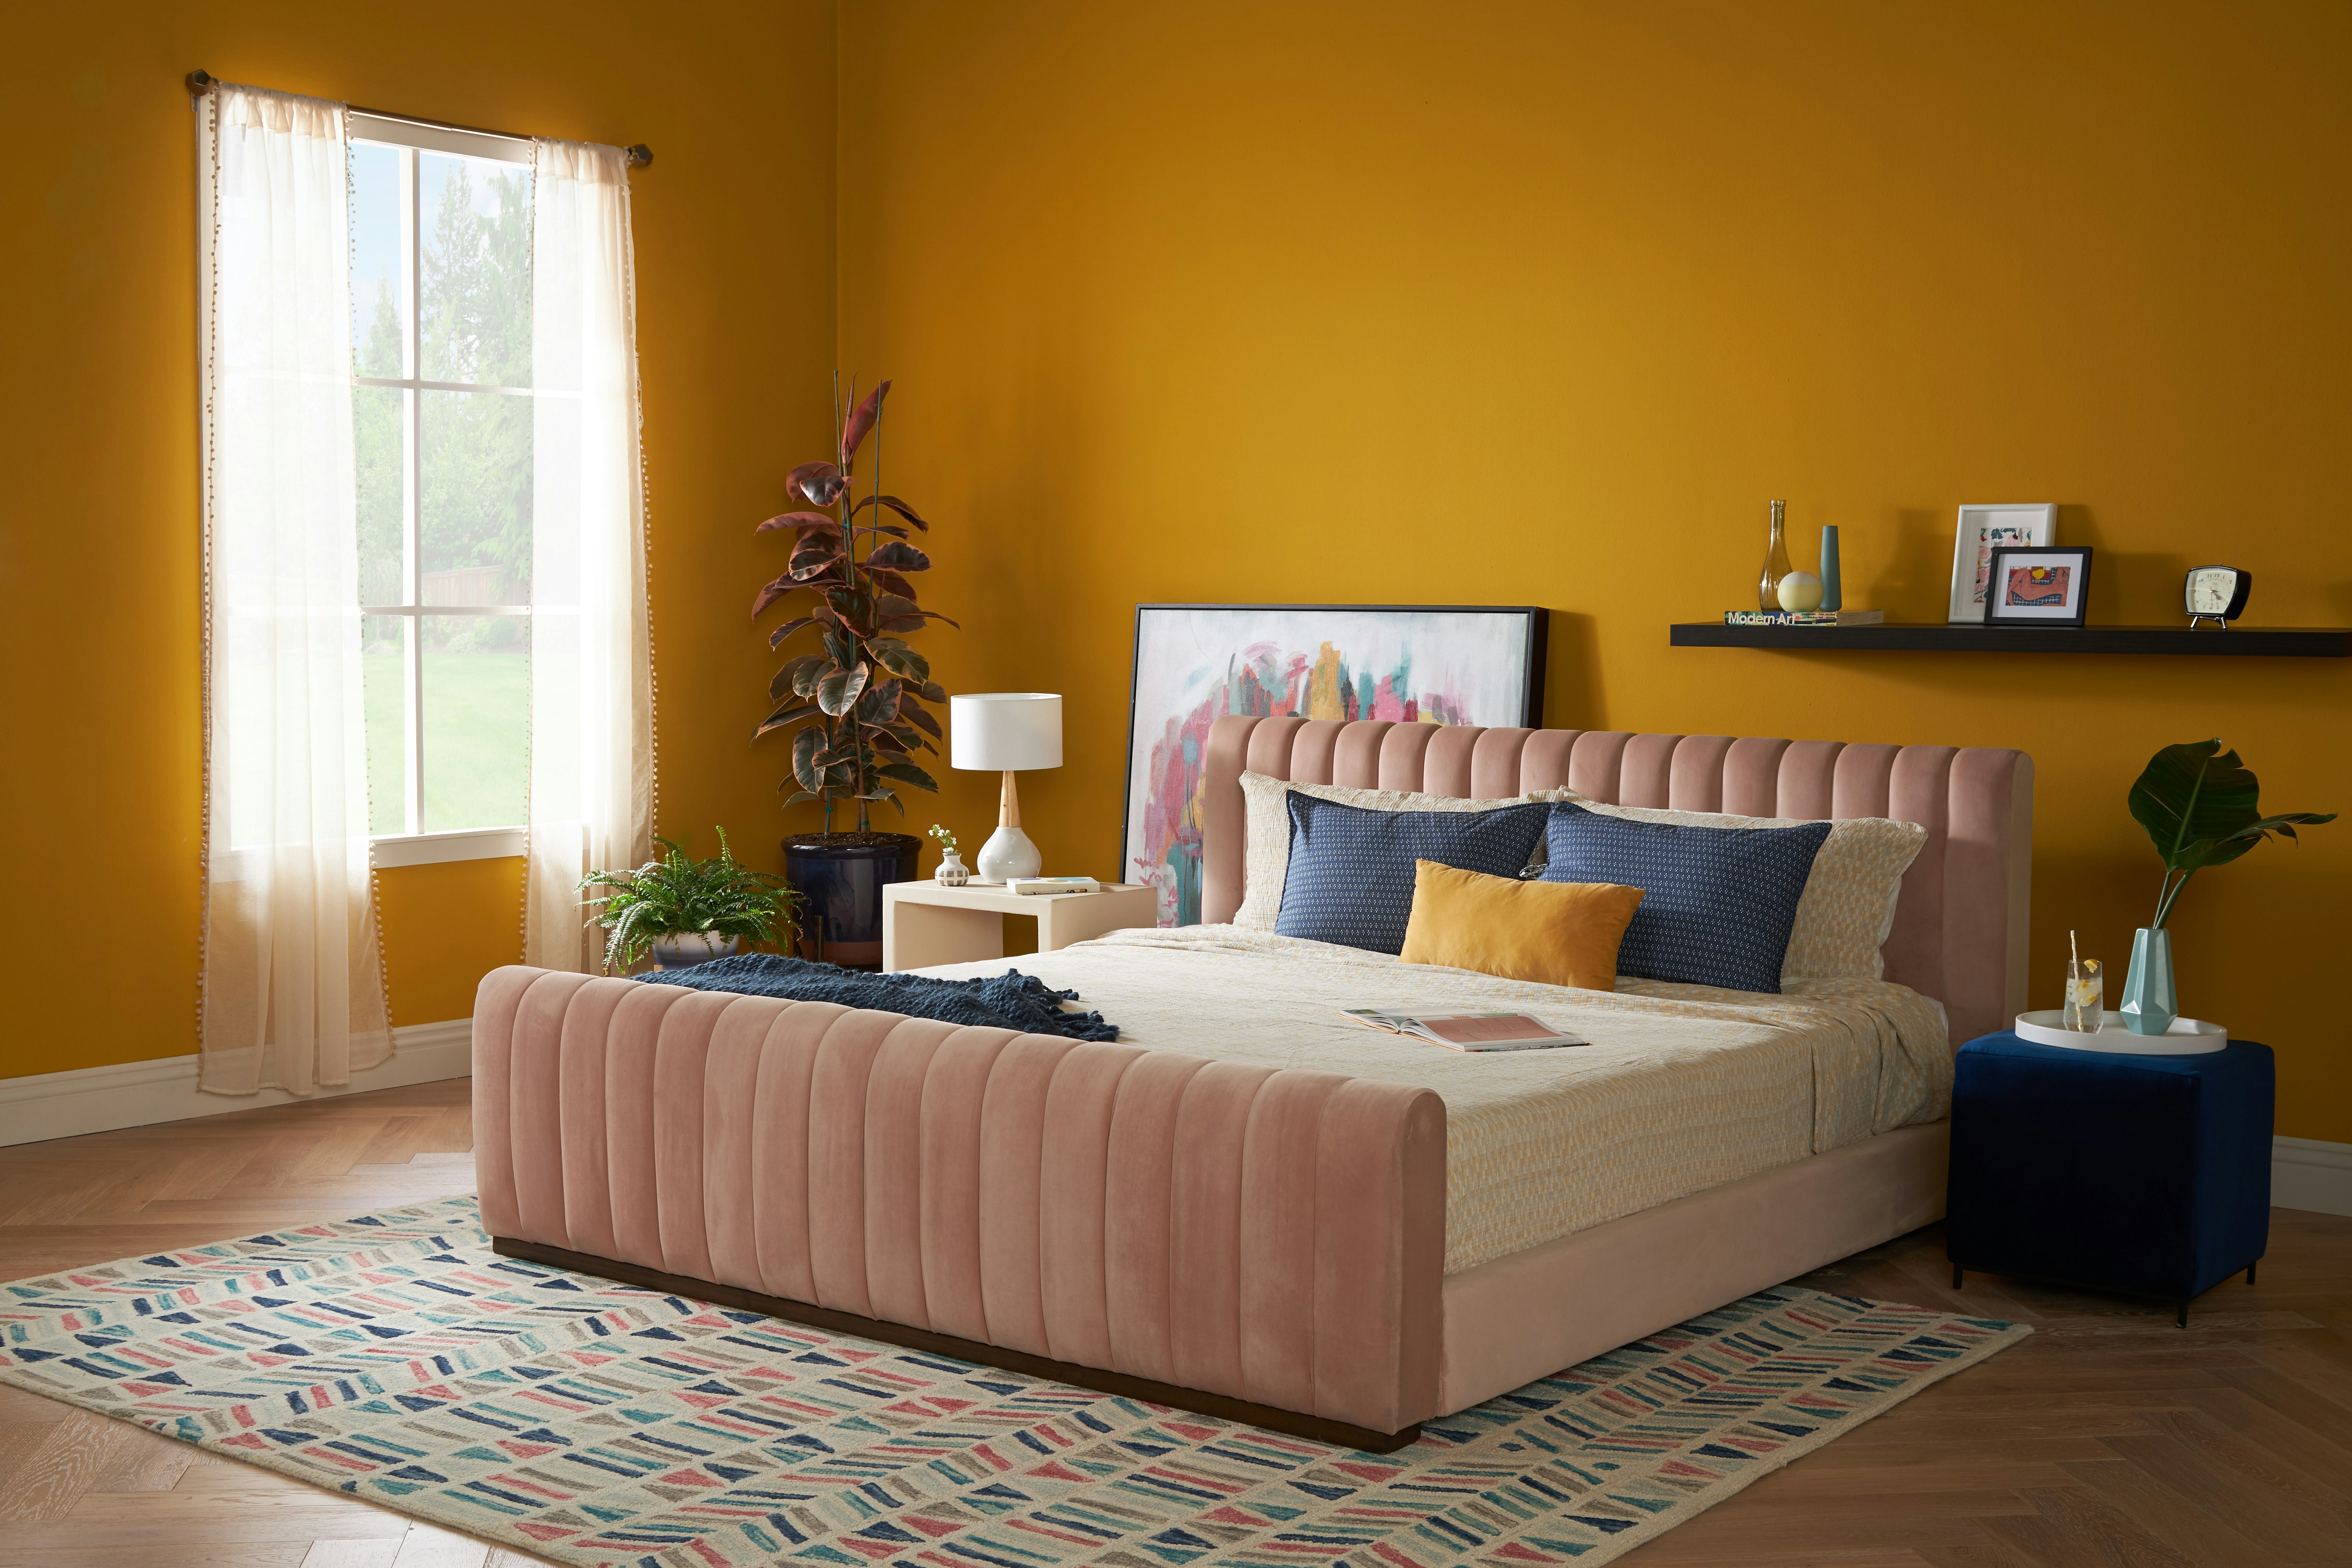 camille ivory bedroom furniture